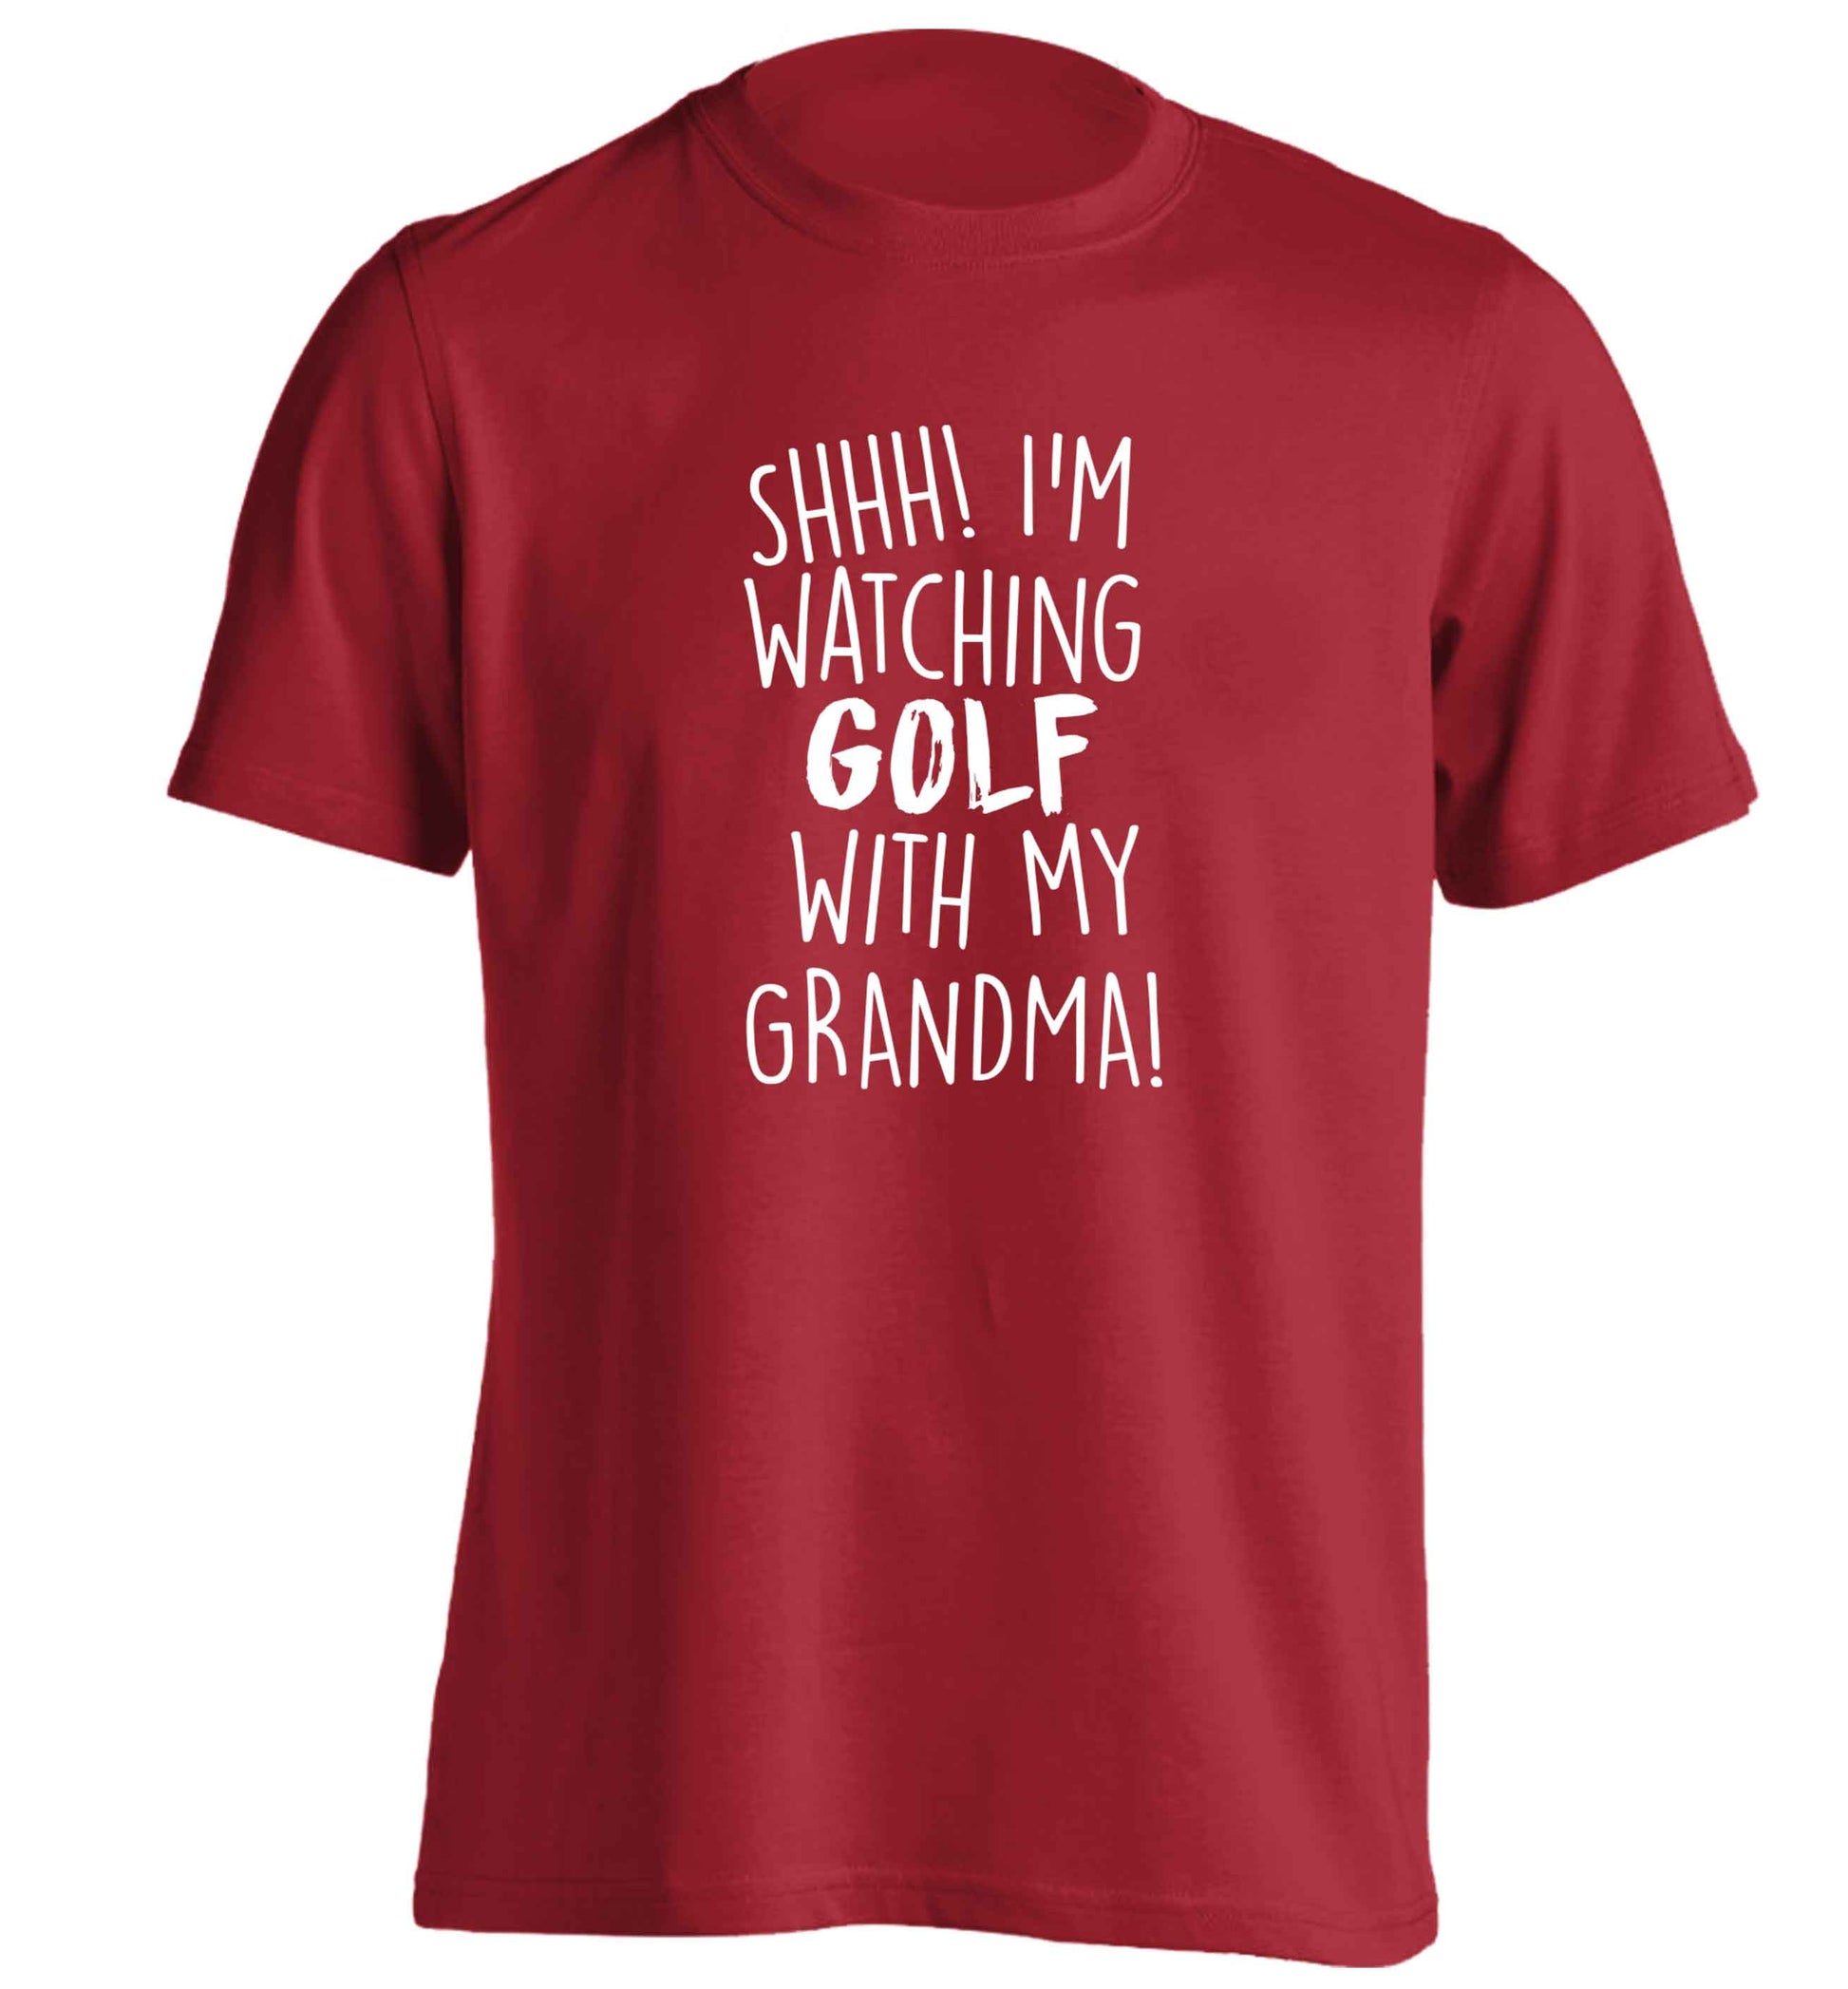 Shh I'm watching golf with my grandma adults unisex red Tshirt 2XL